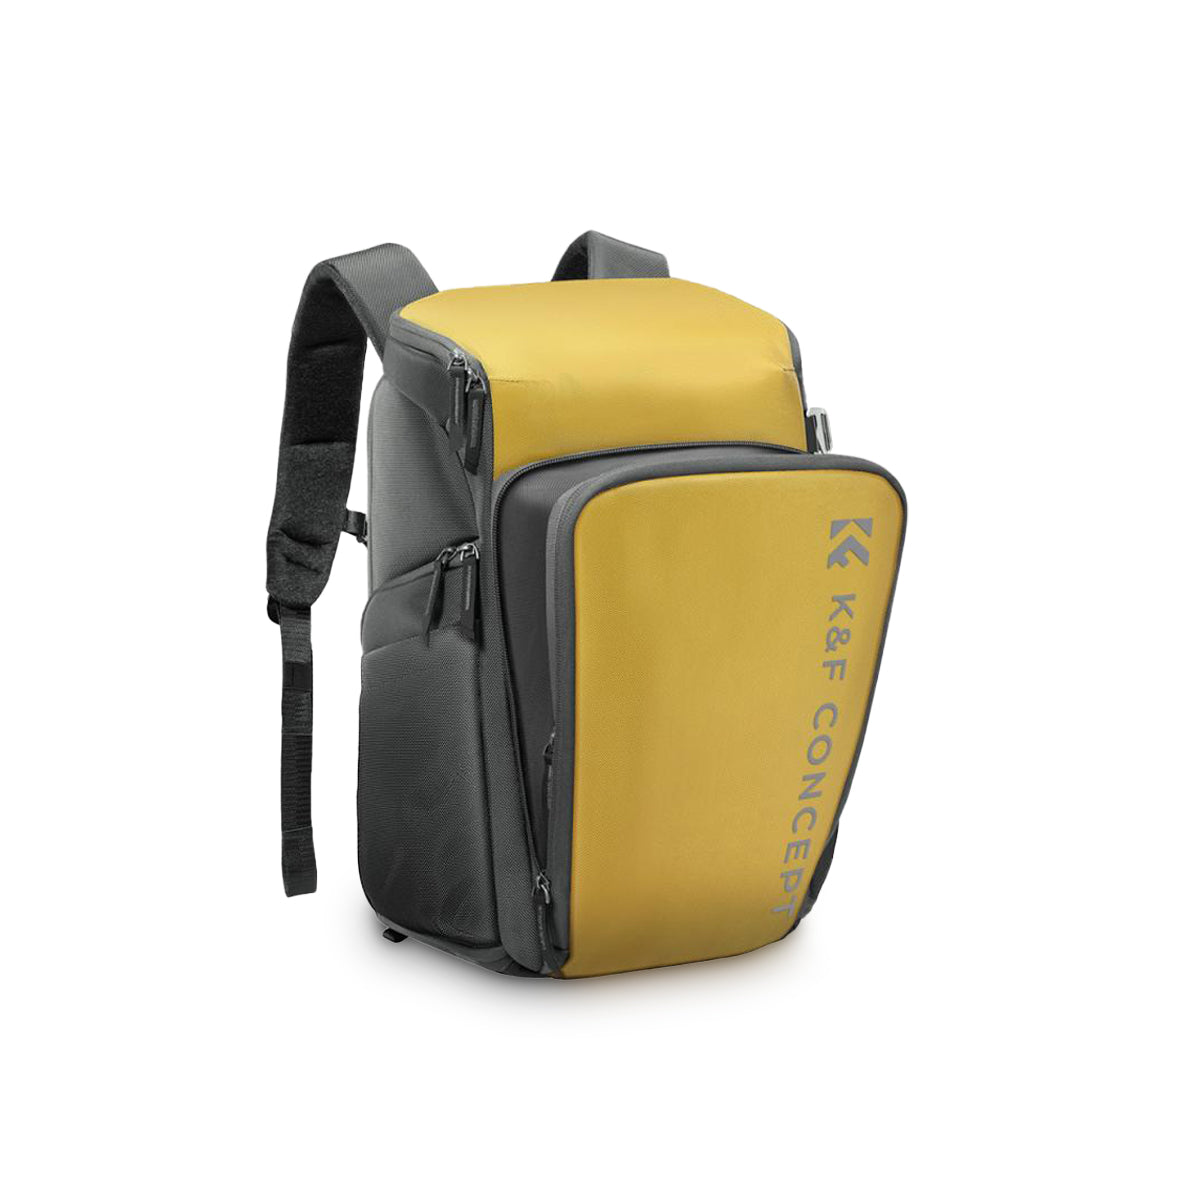 Alpha Camera Backpack Air (Yellow, 25L) - K&F Concept